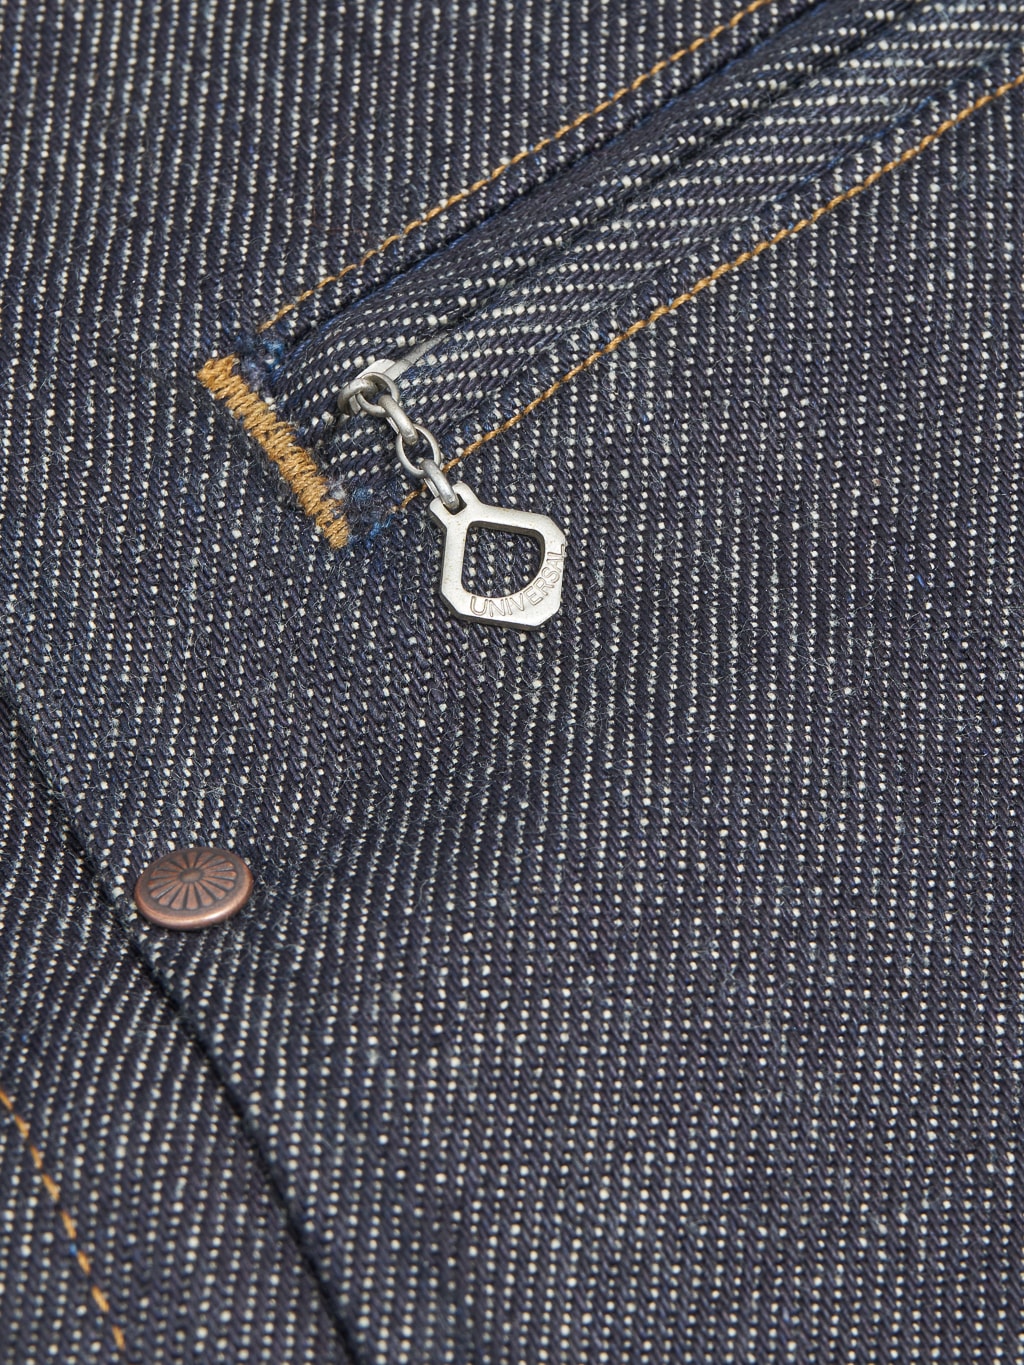 Freenote cloth denim shearling jacket zip pocket detailed view